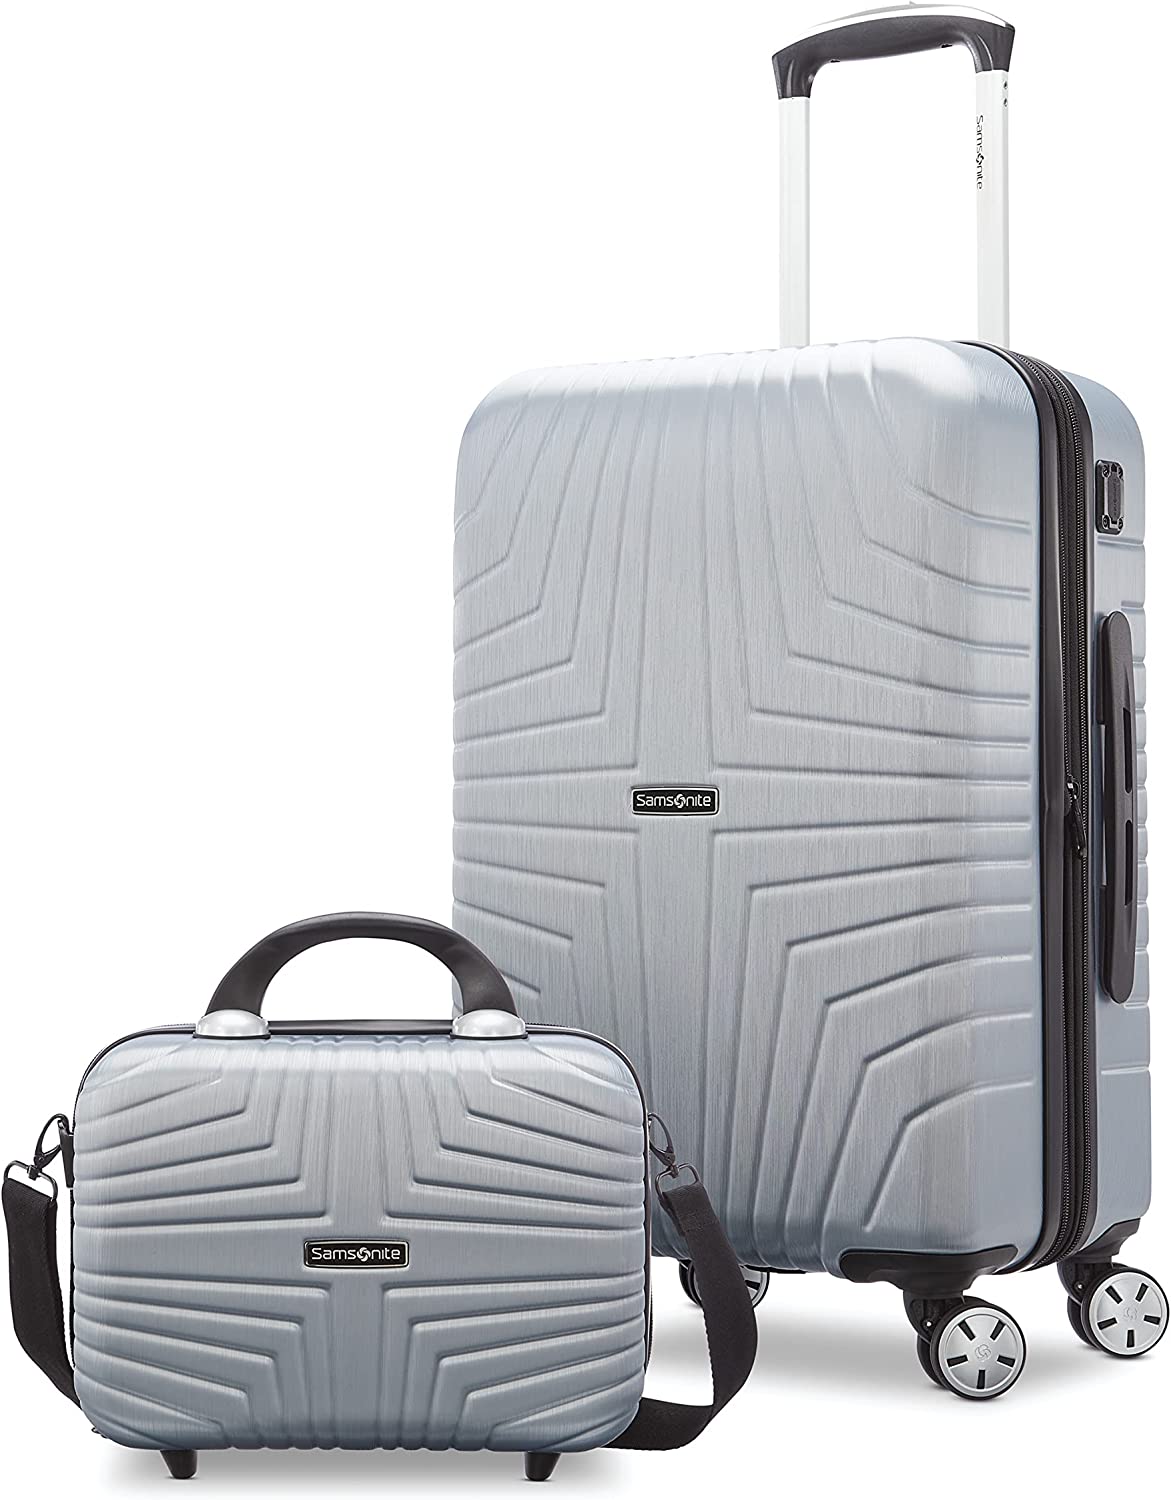 samsonite 2 piece luggage set amazon - AllEars.Net